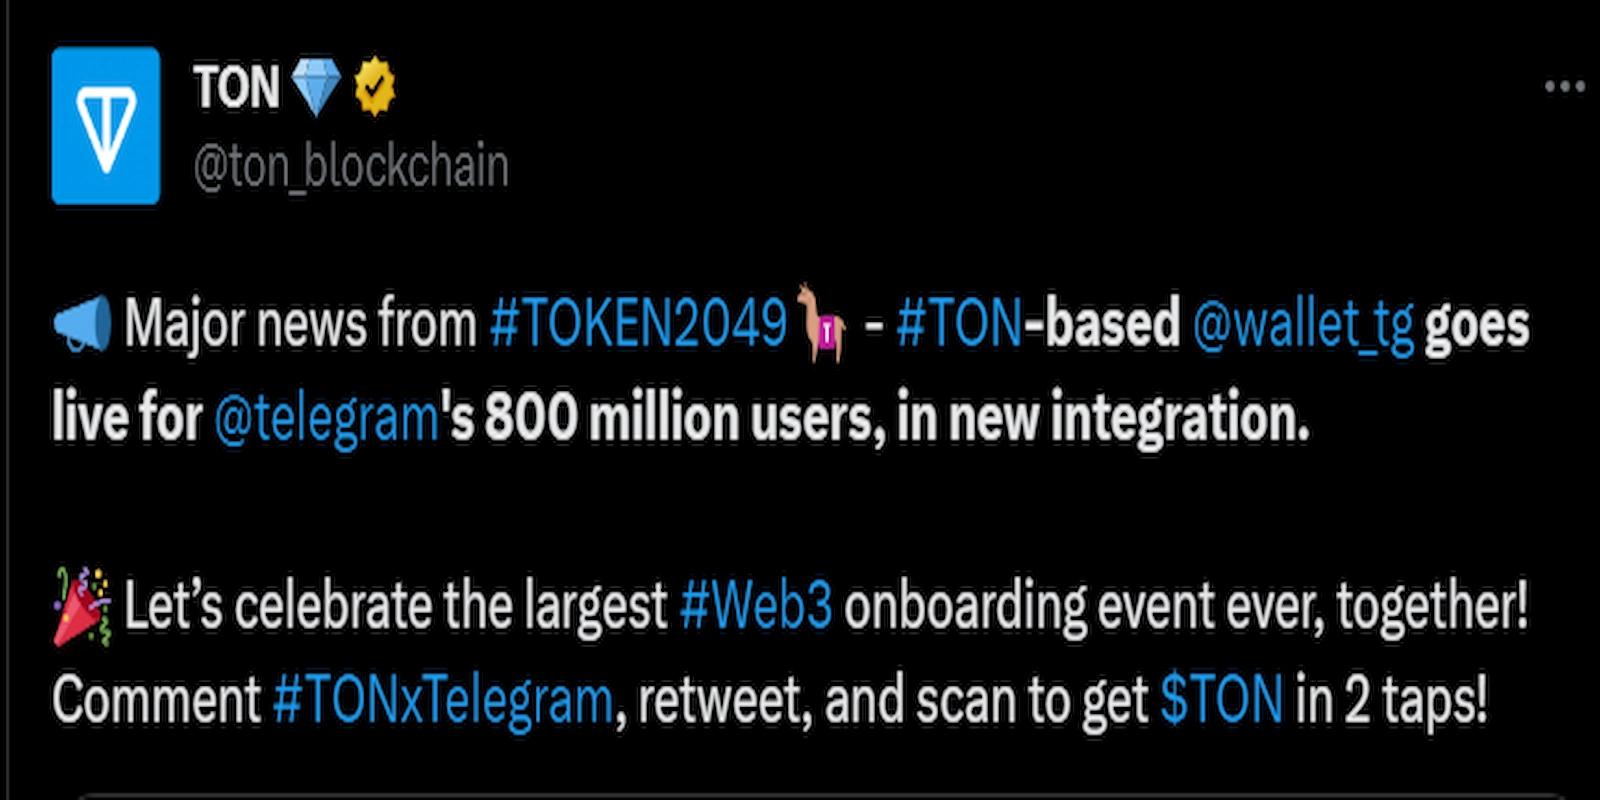 Toncoin announced a partnership with Telegram.